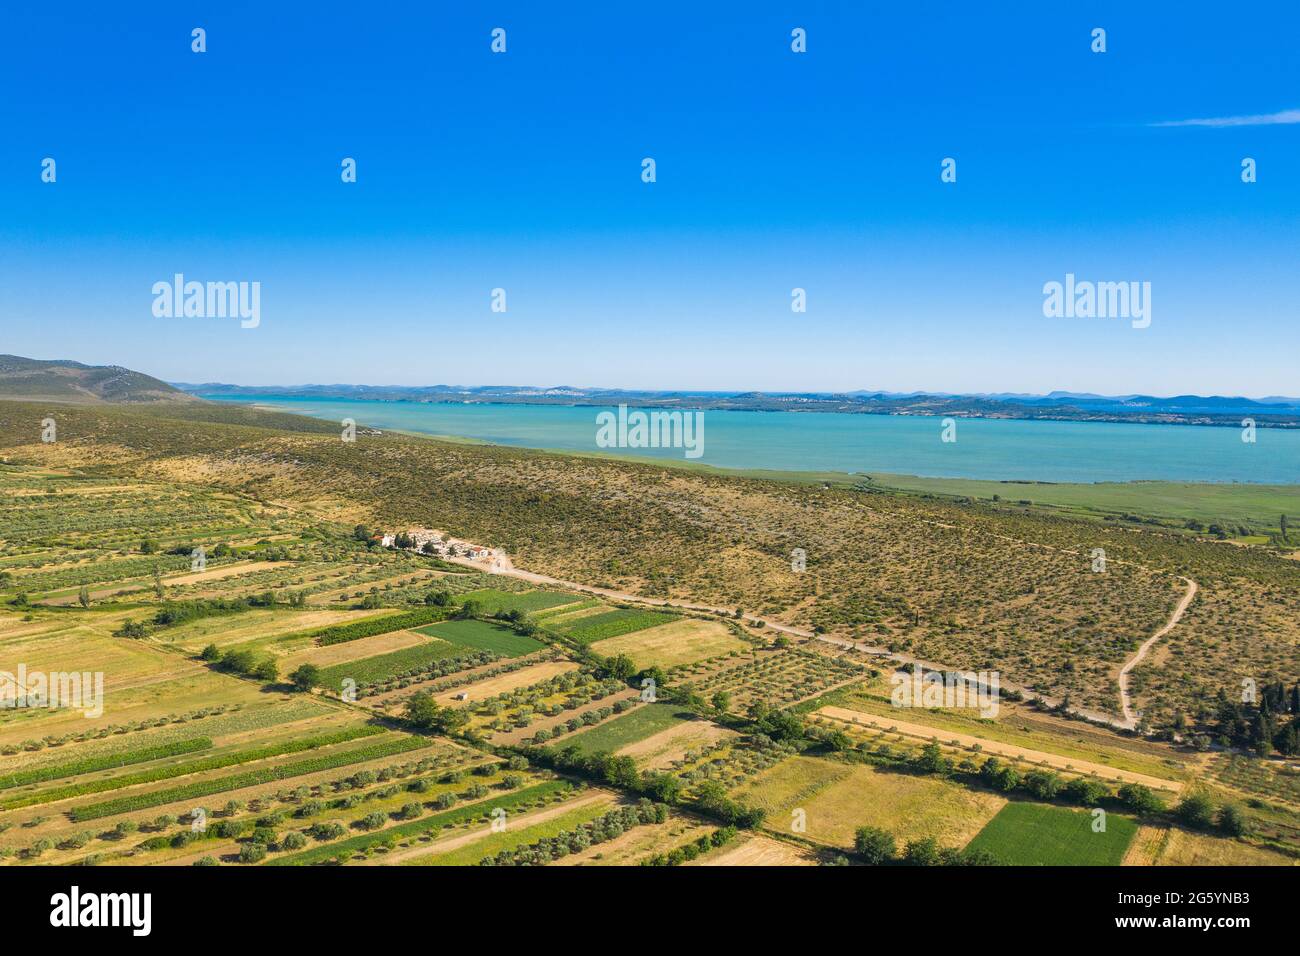 Aerial view of Vransko lake and agriculture fields, Dalmatia, Croatia Stock Photo